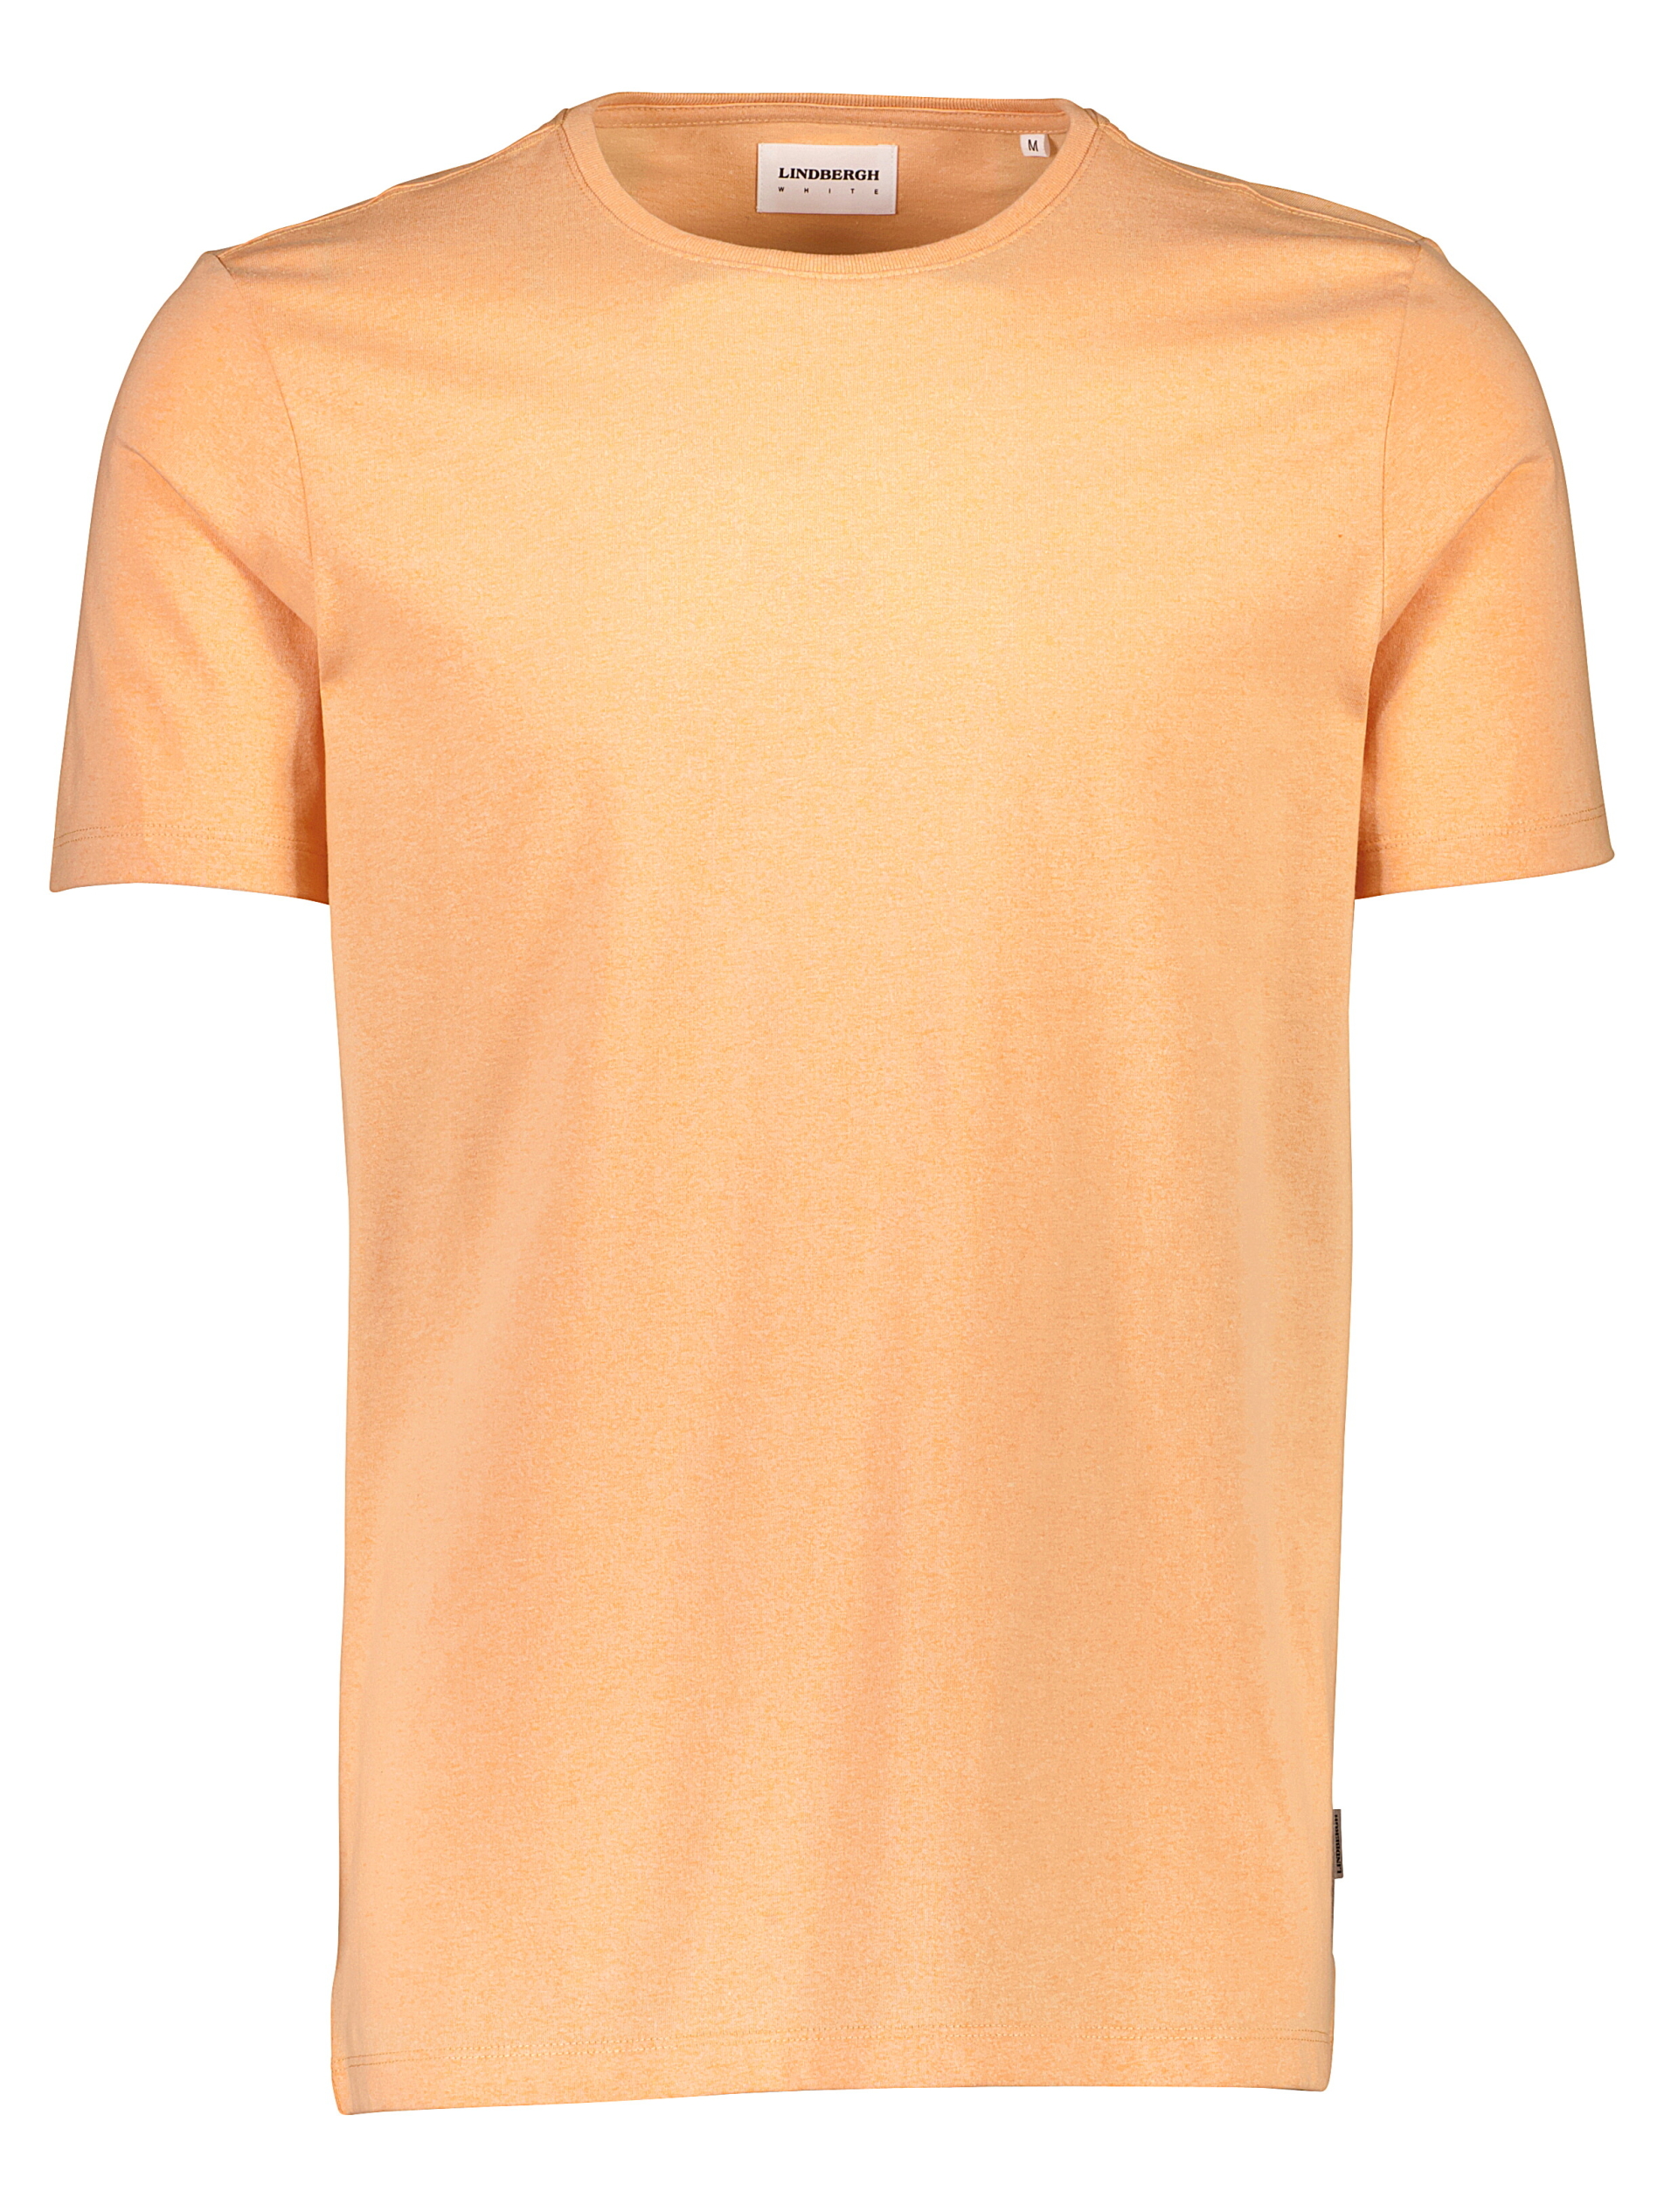 Lindbergh T-shirt orange / faded mango mix